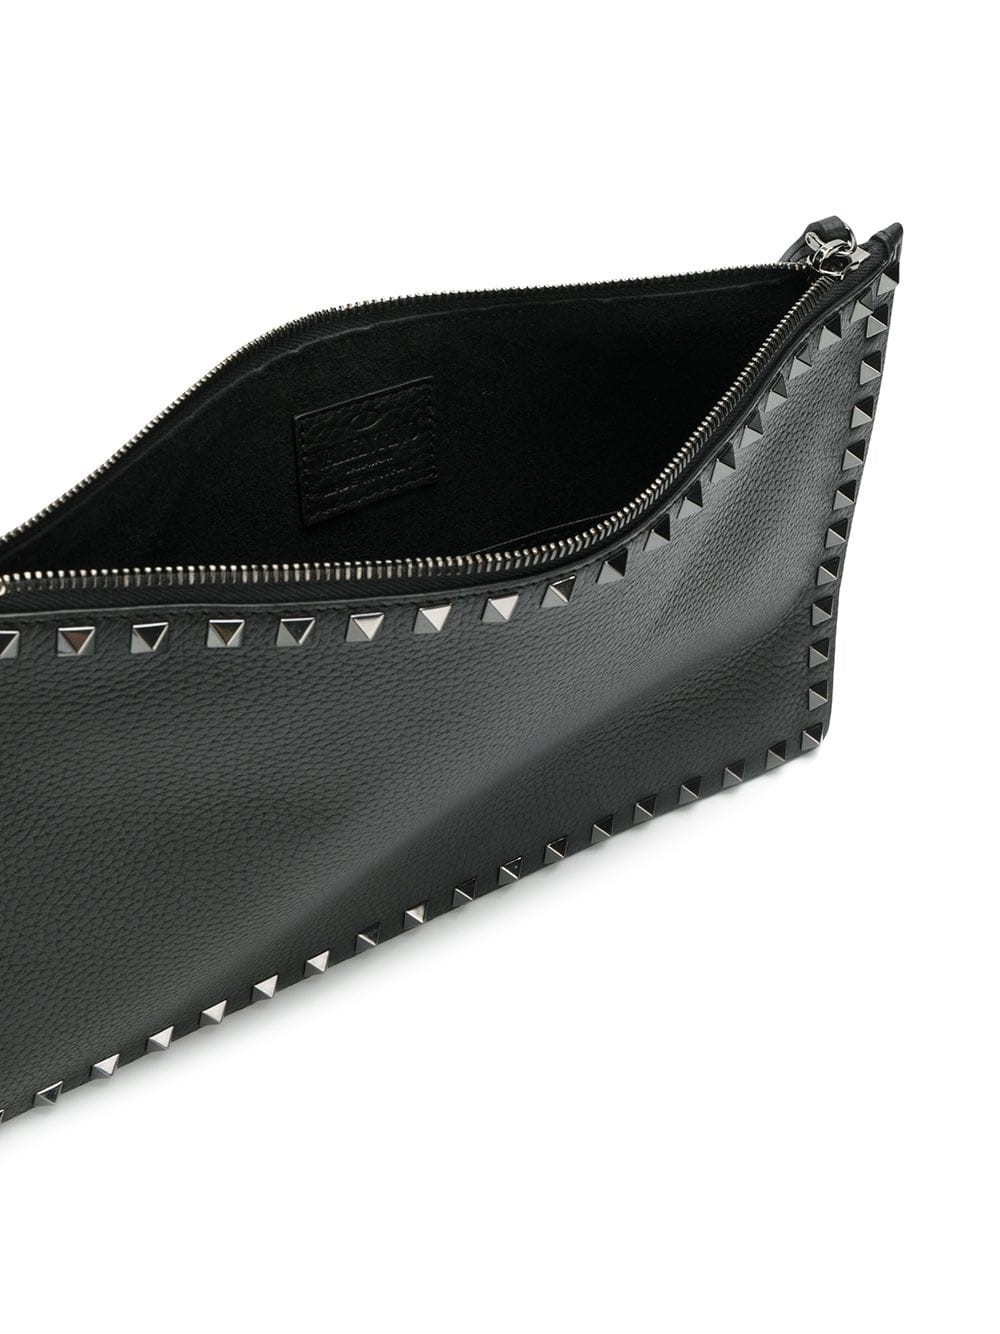 valentino black studded clutch